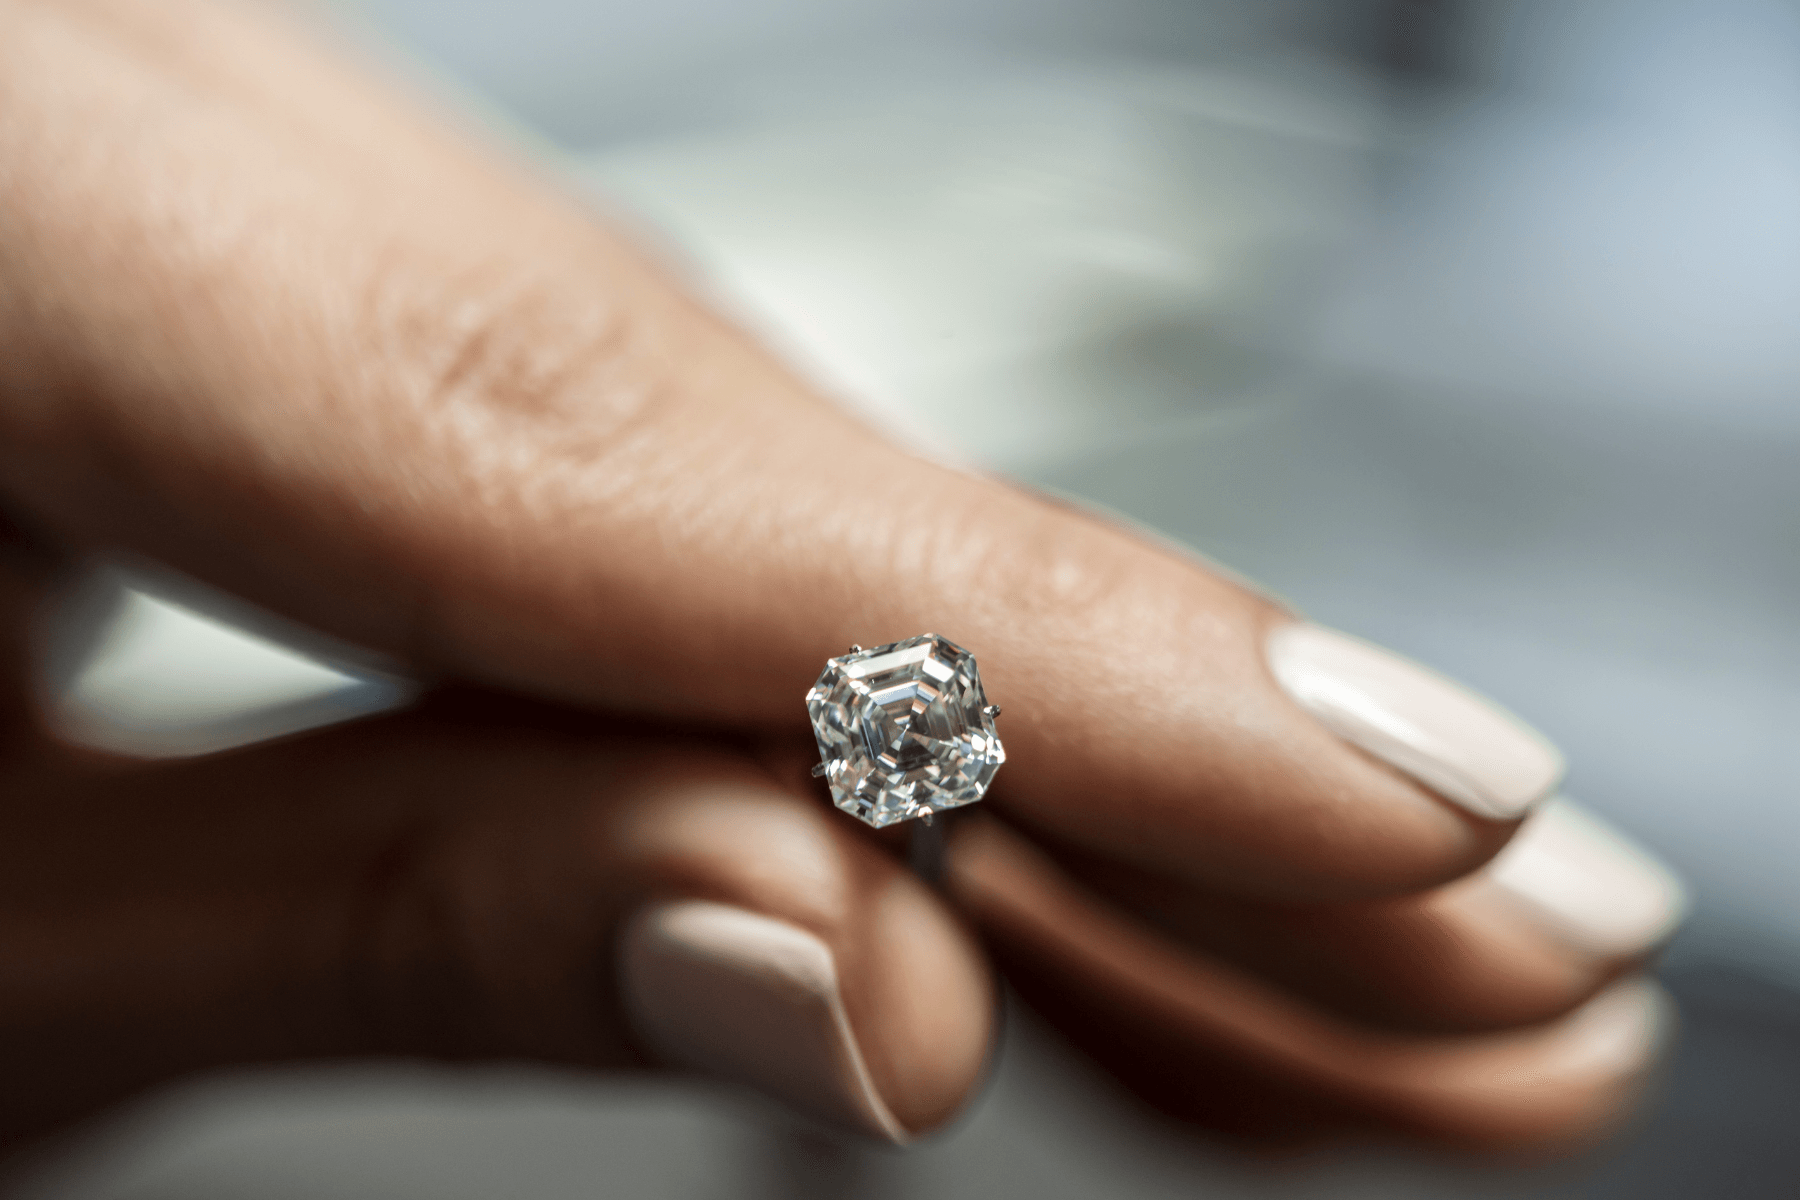 Diamond quality facts